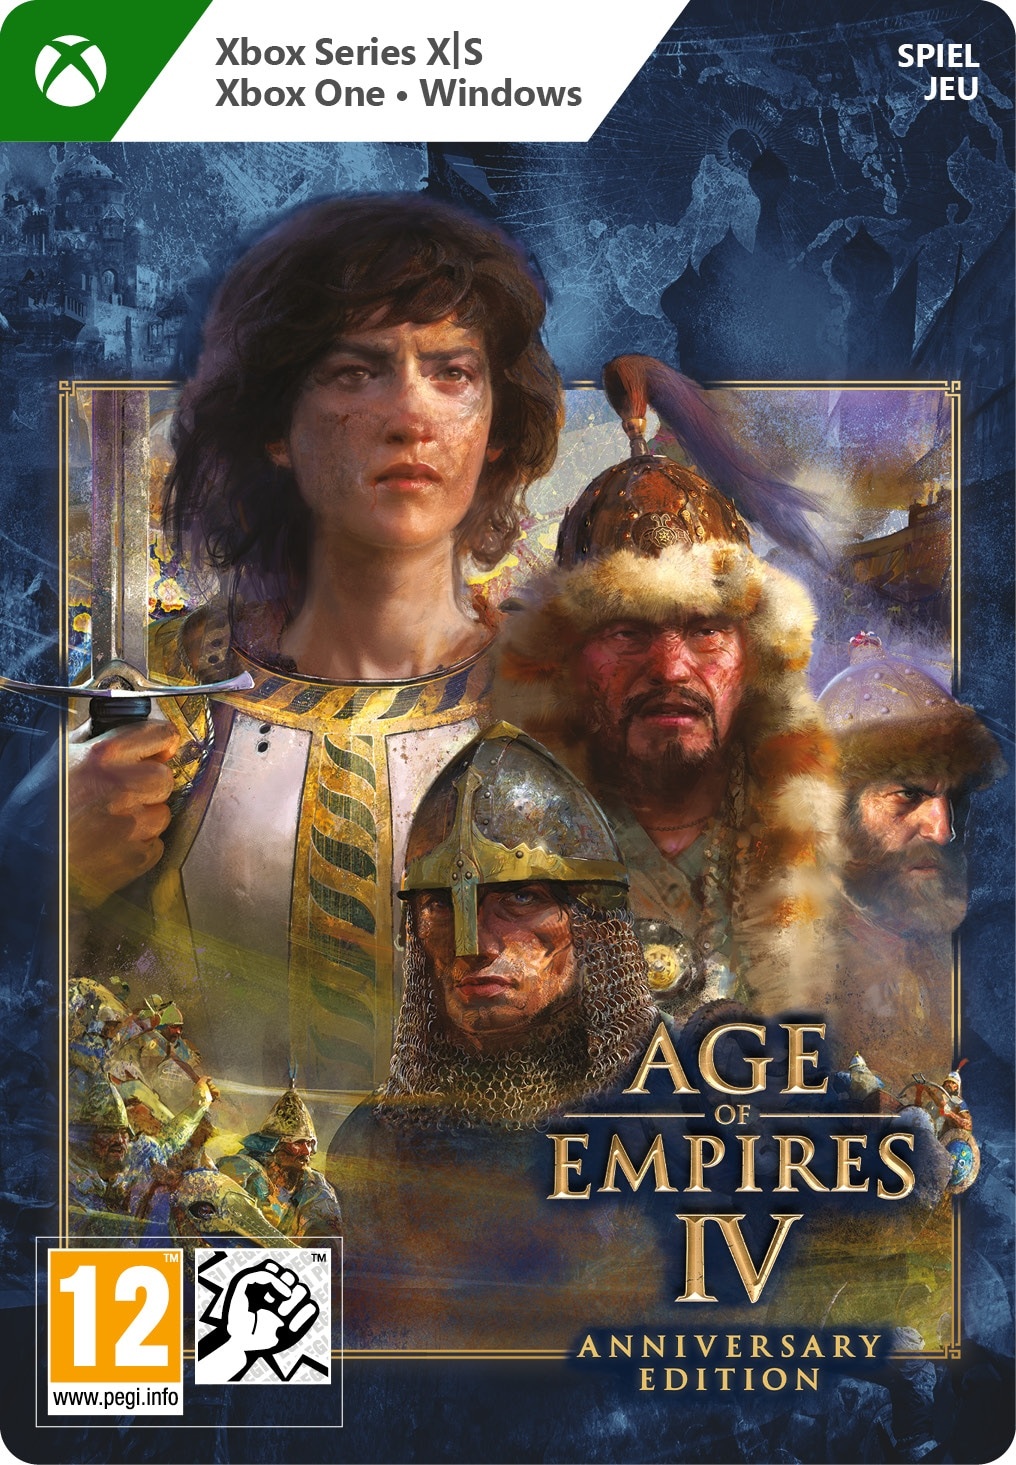 Age of Empires IV Anniversary Edition (Xbox, Windows) zum Sofortdownload